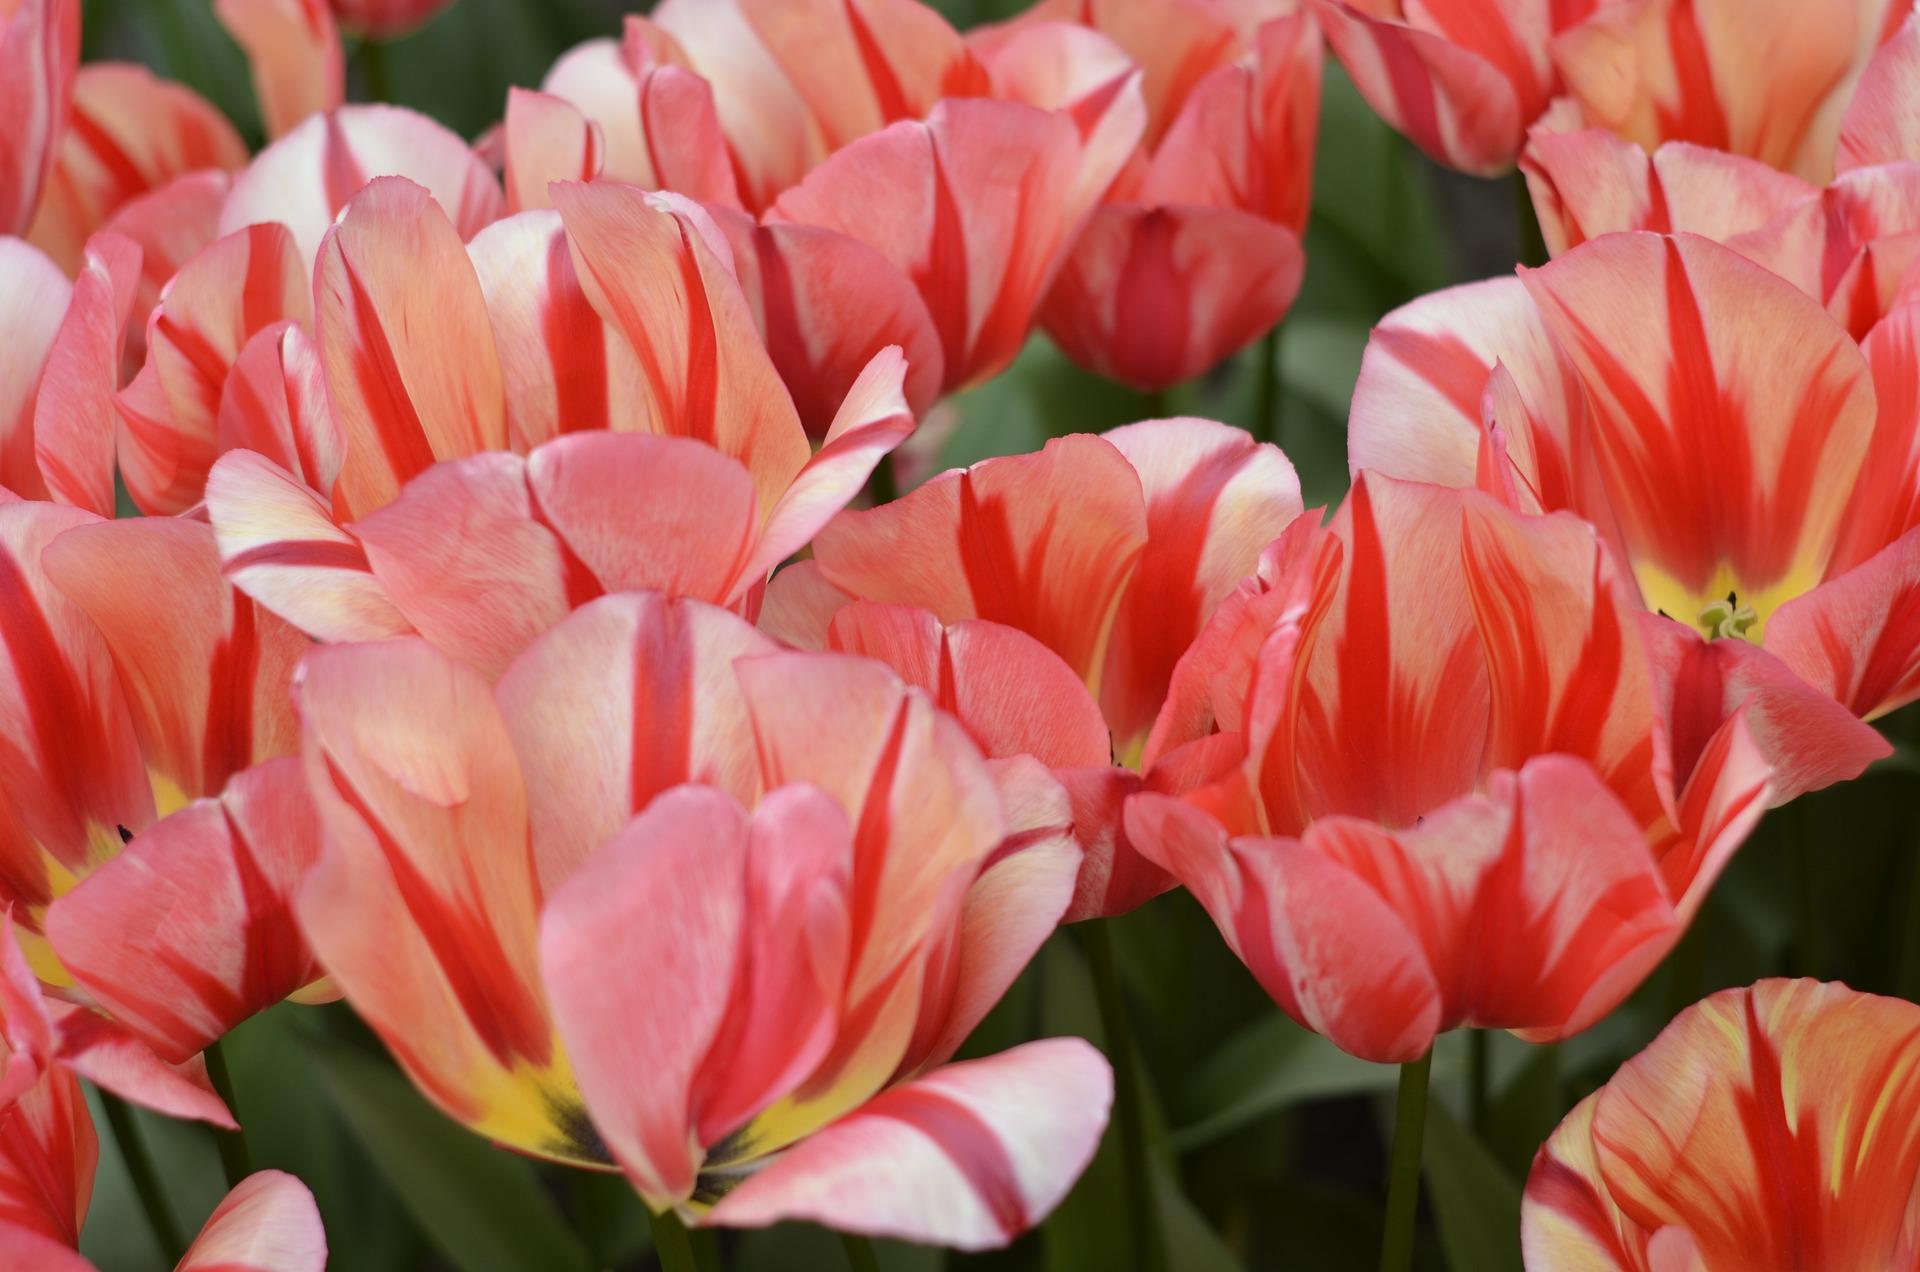 Tulip Triumph 'Spryng Break' - Tulip from Leo Berbee Bulb Company